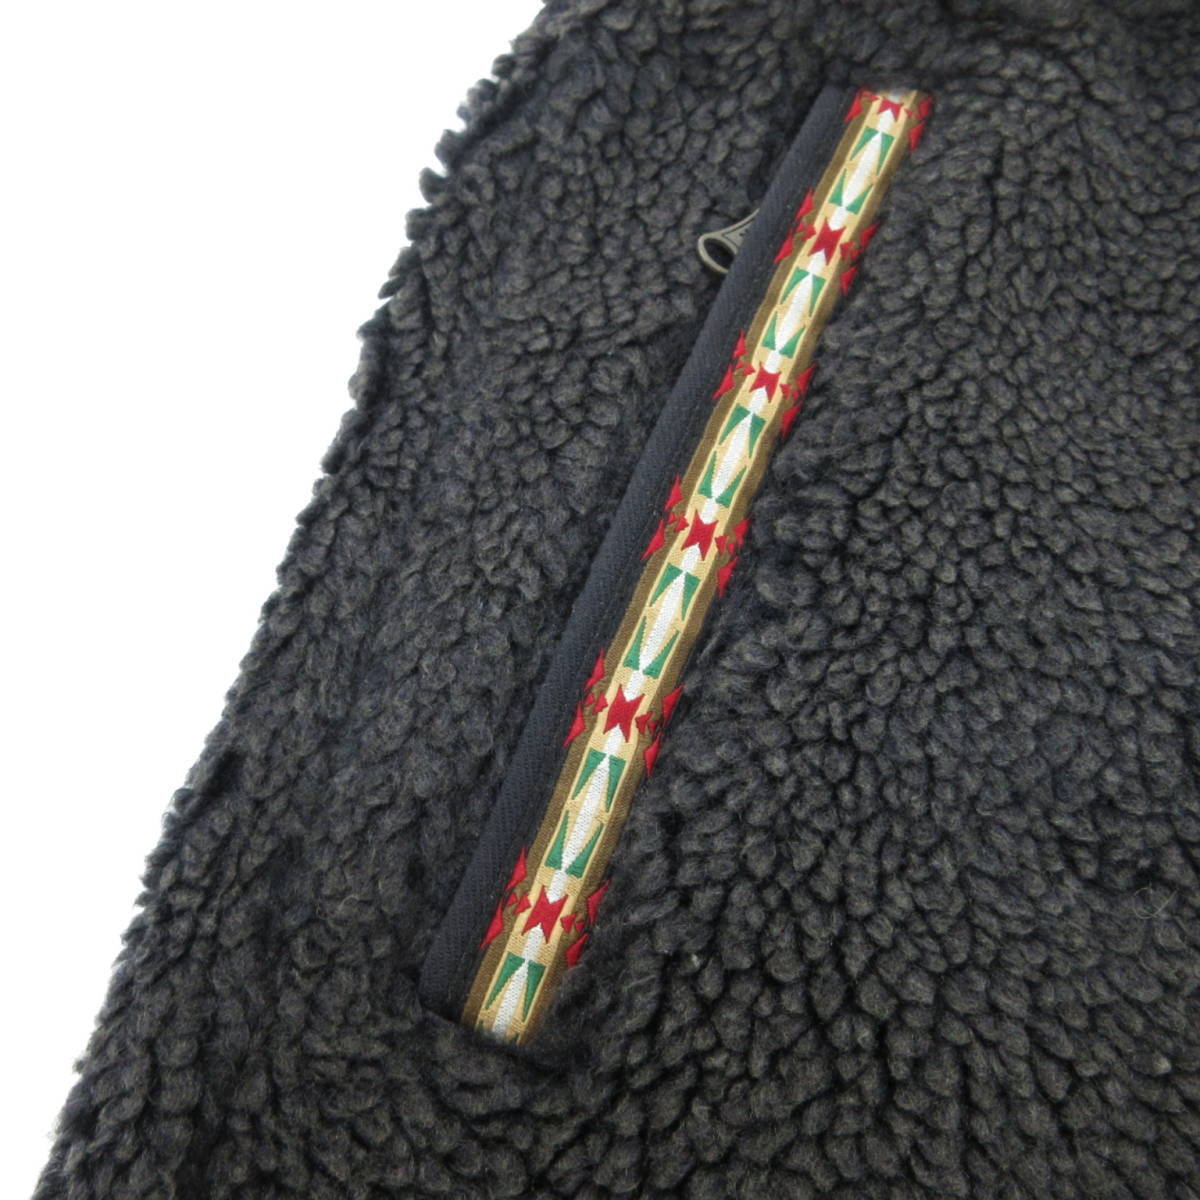  new goods *Marmot* heat insulation boa fleece shorts W76cm black * Marmot outdoor *J2306